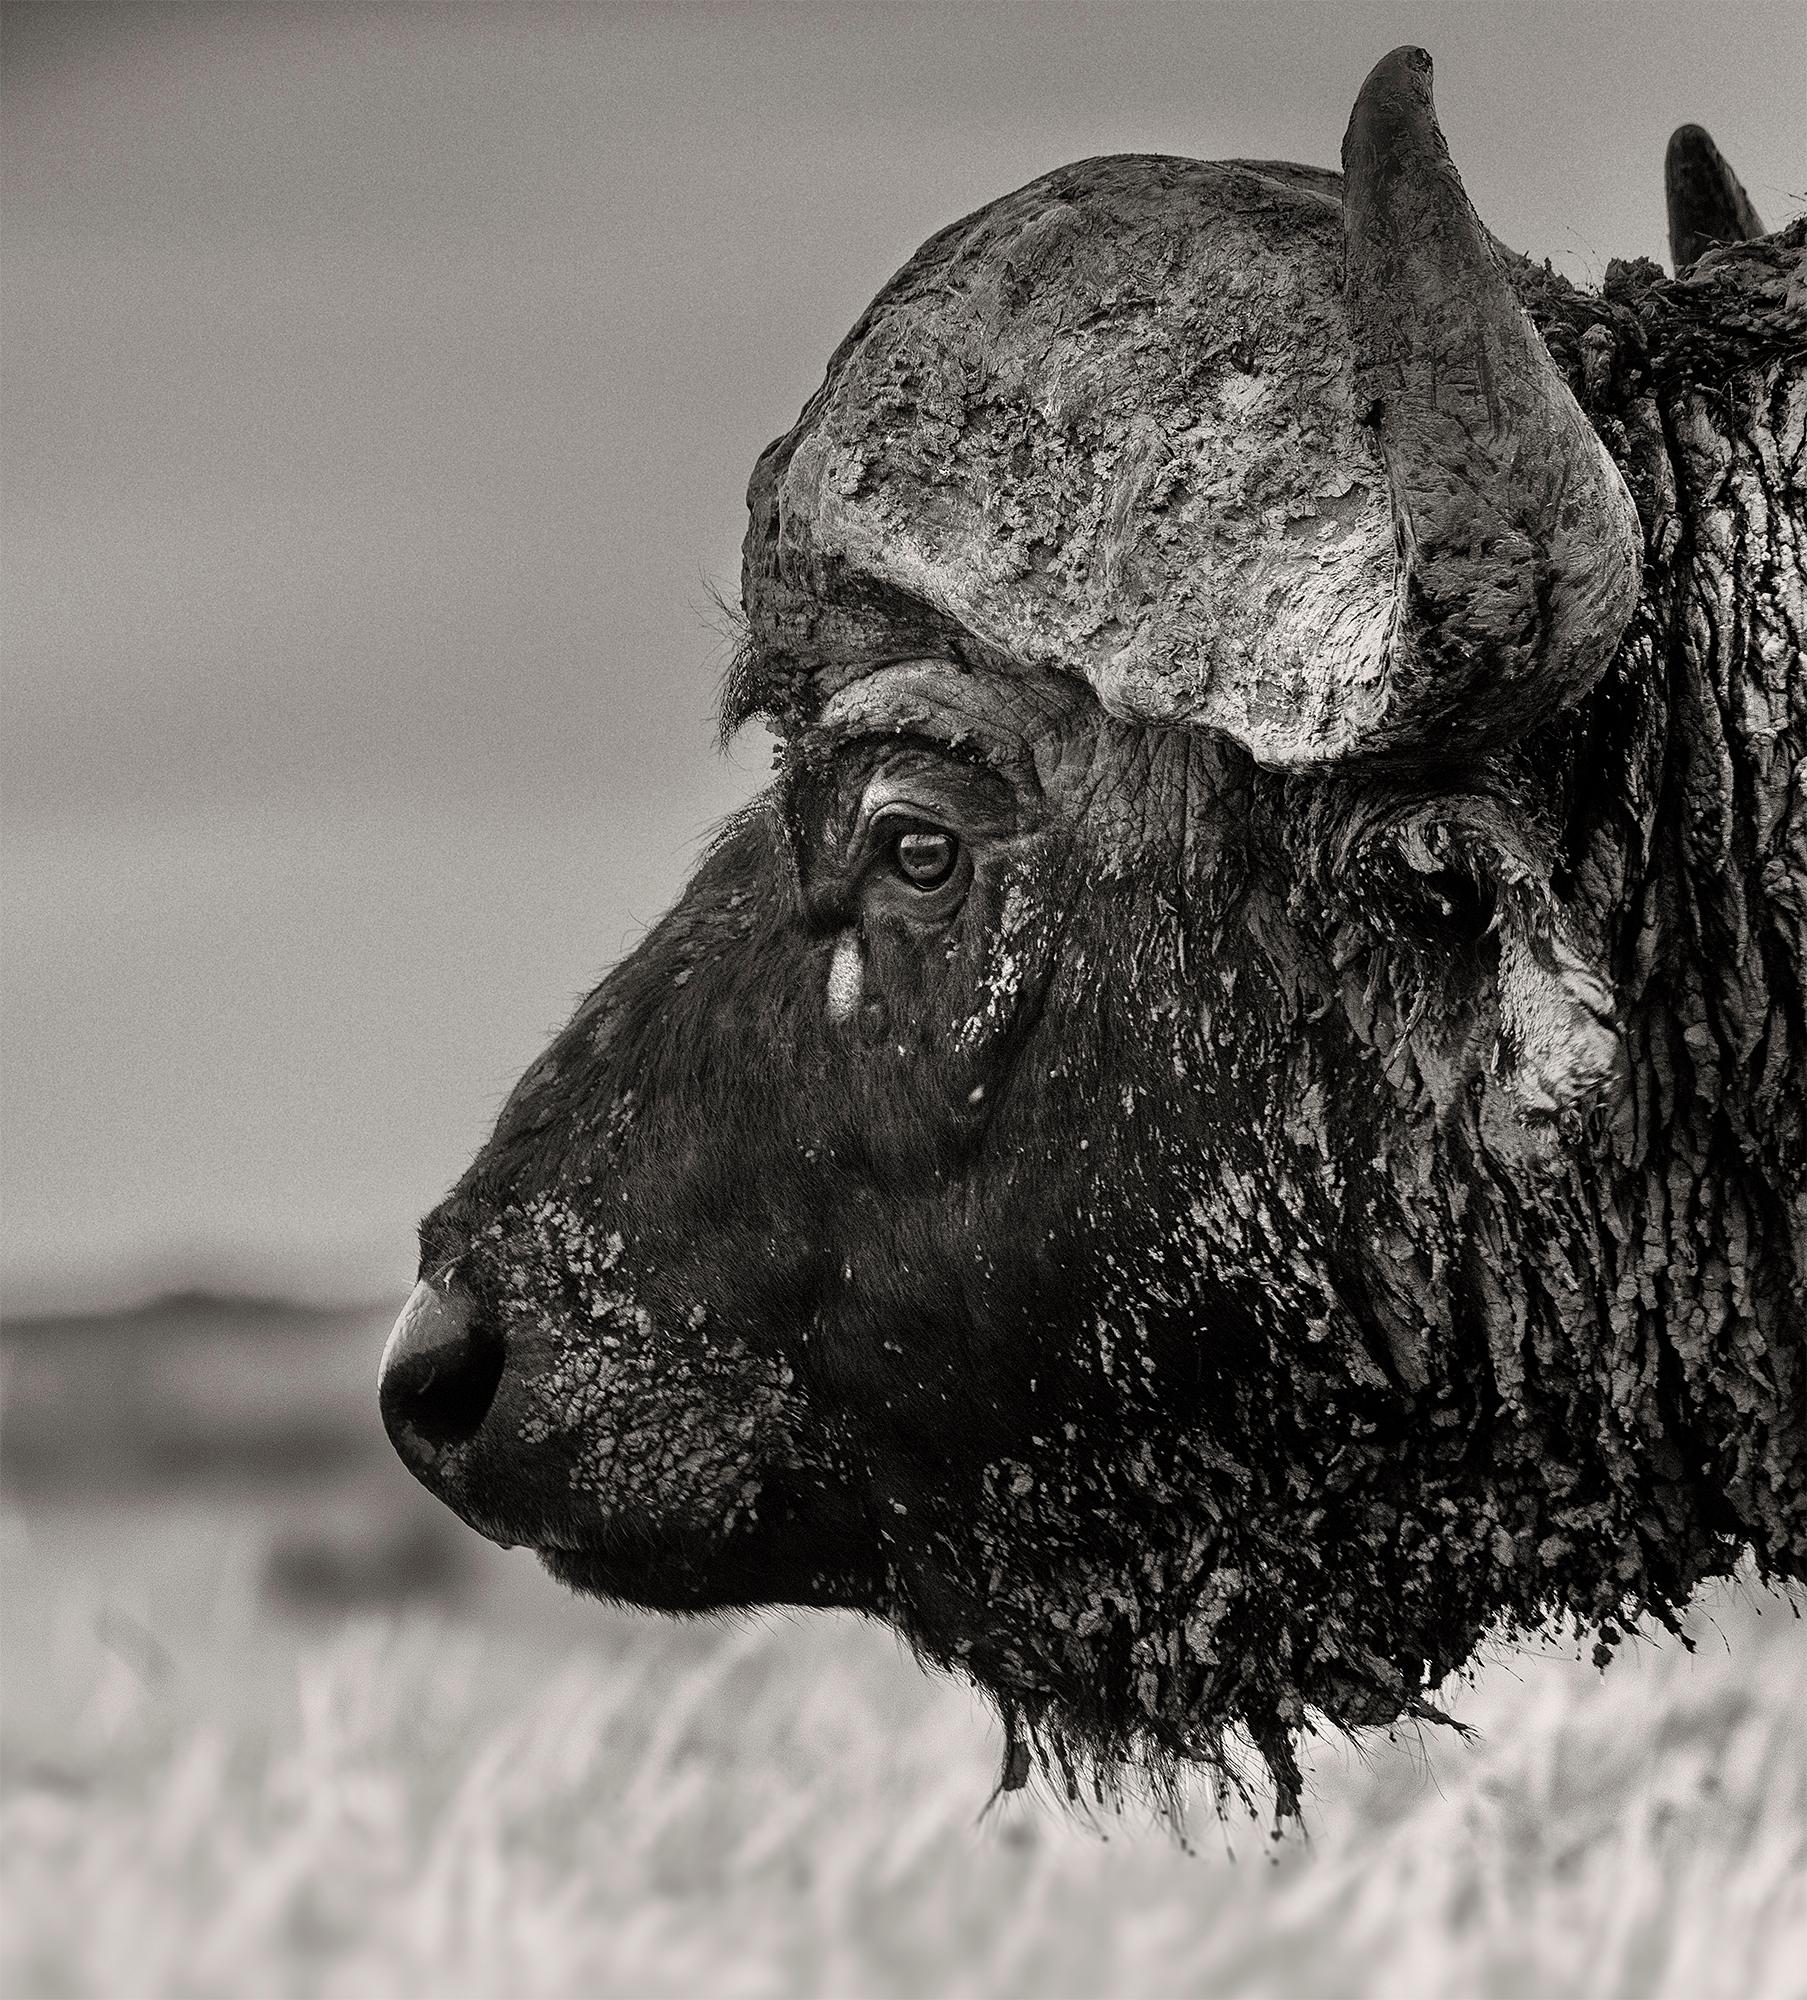 Buffalo, Kenya 2019, contemporary, wildlife, b&w photography - Gray Black and White Photograph by Joachim Schmeisser